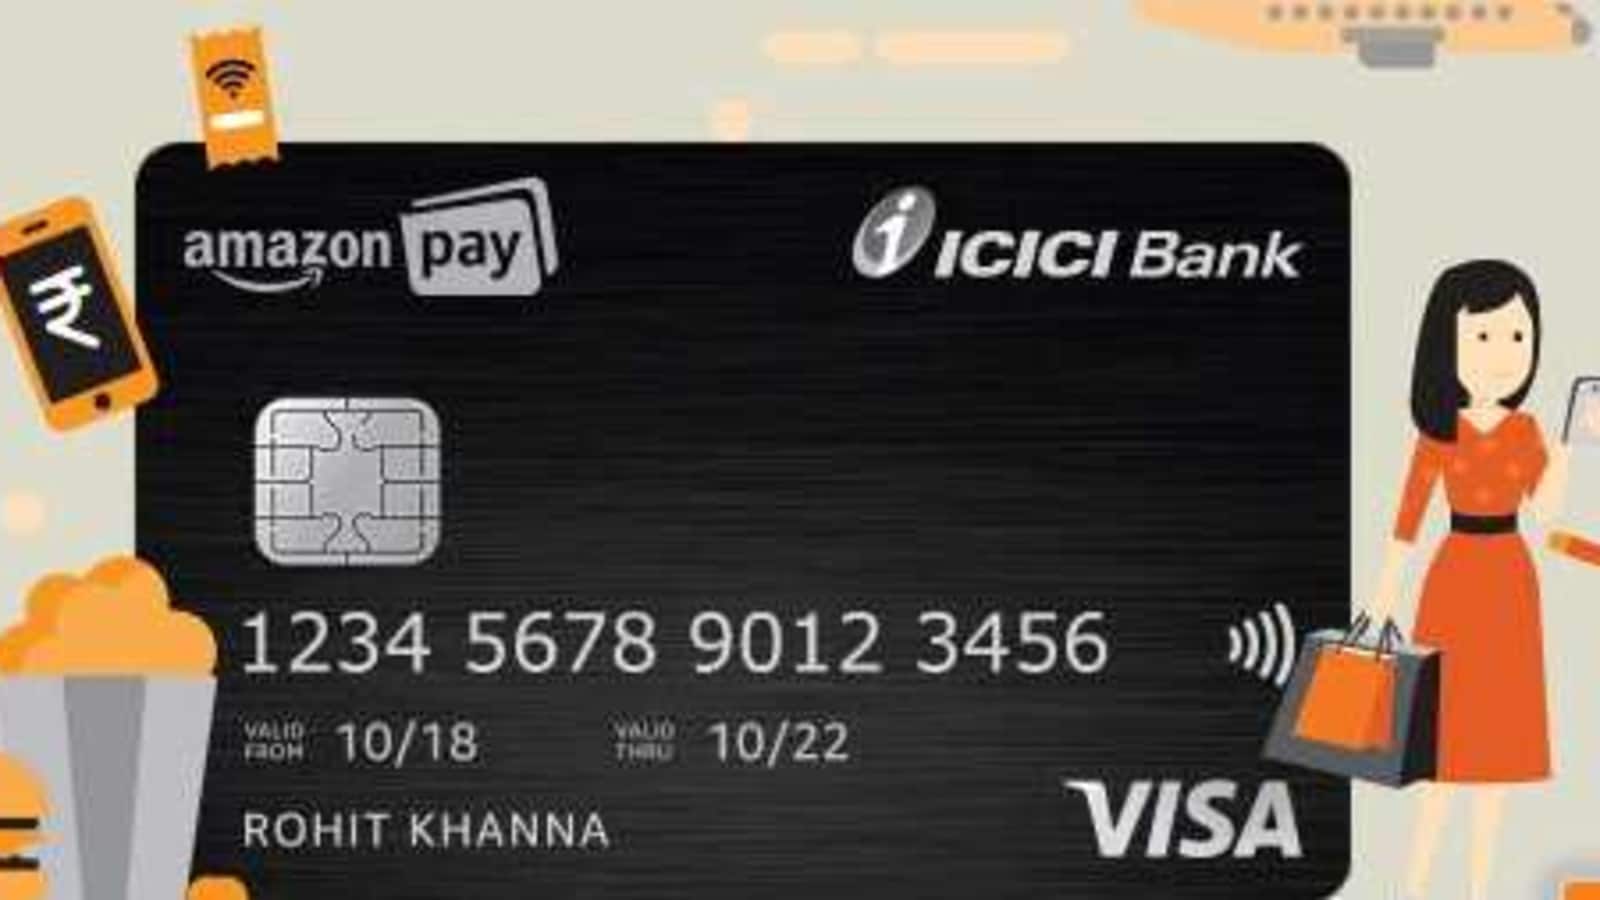 Amazon Pay ICICI Bank Visa Credit Card Gives Cashbacks Galore